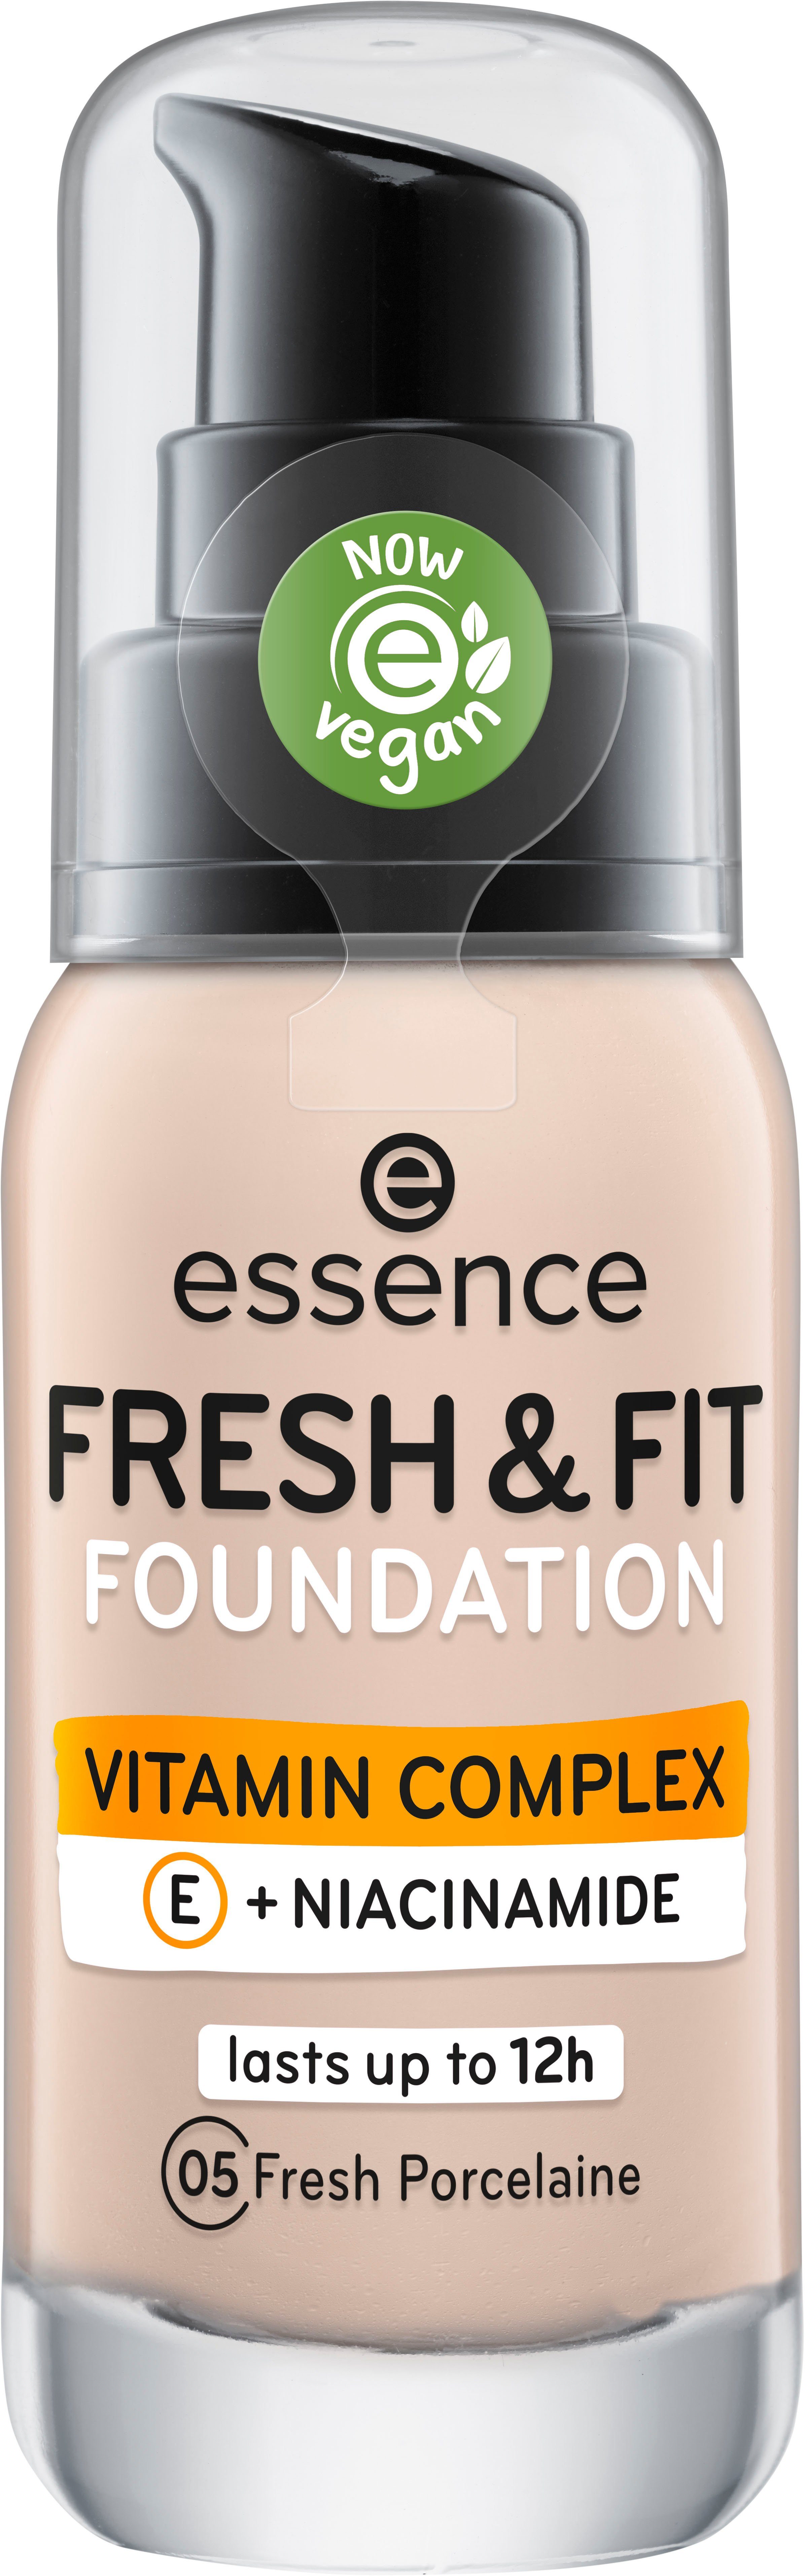 Essence Foundation FRESH & FIT FOUNDATION, 3-tlg. porcelaine fresh